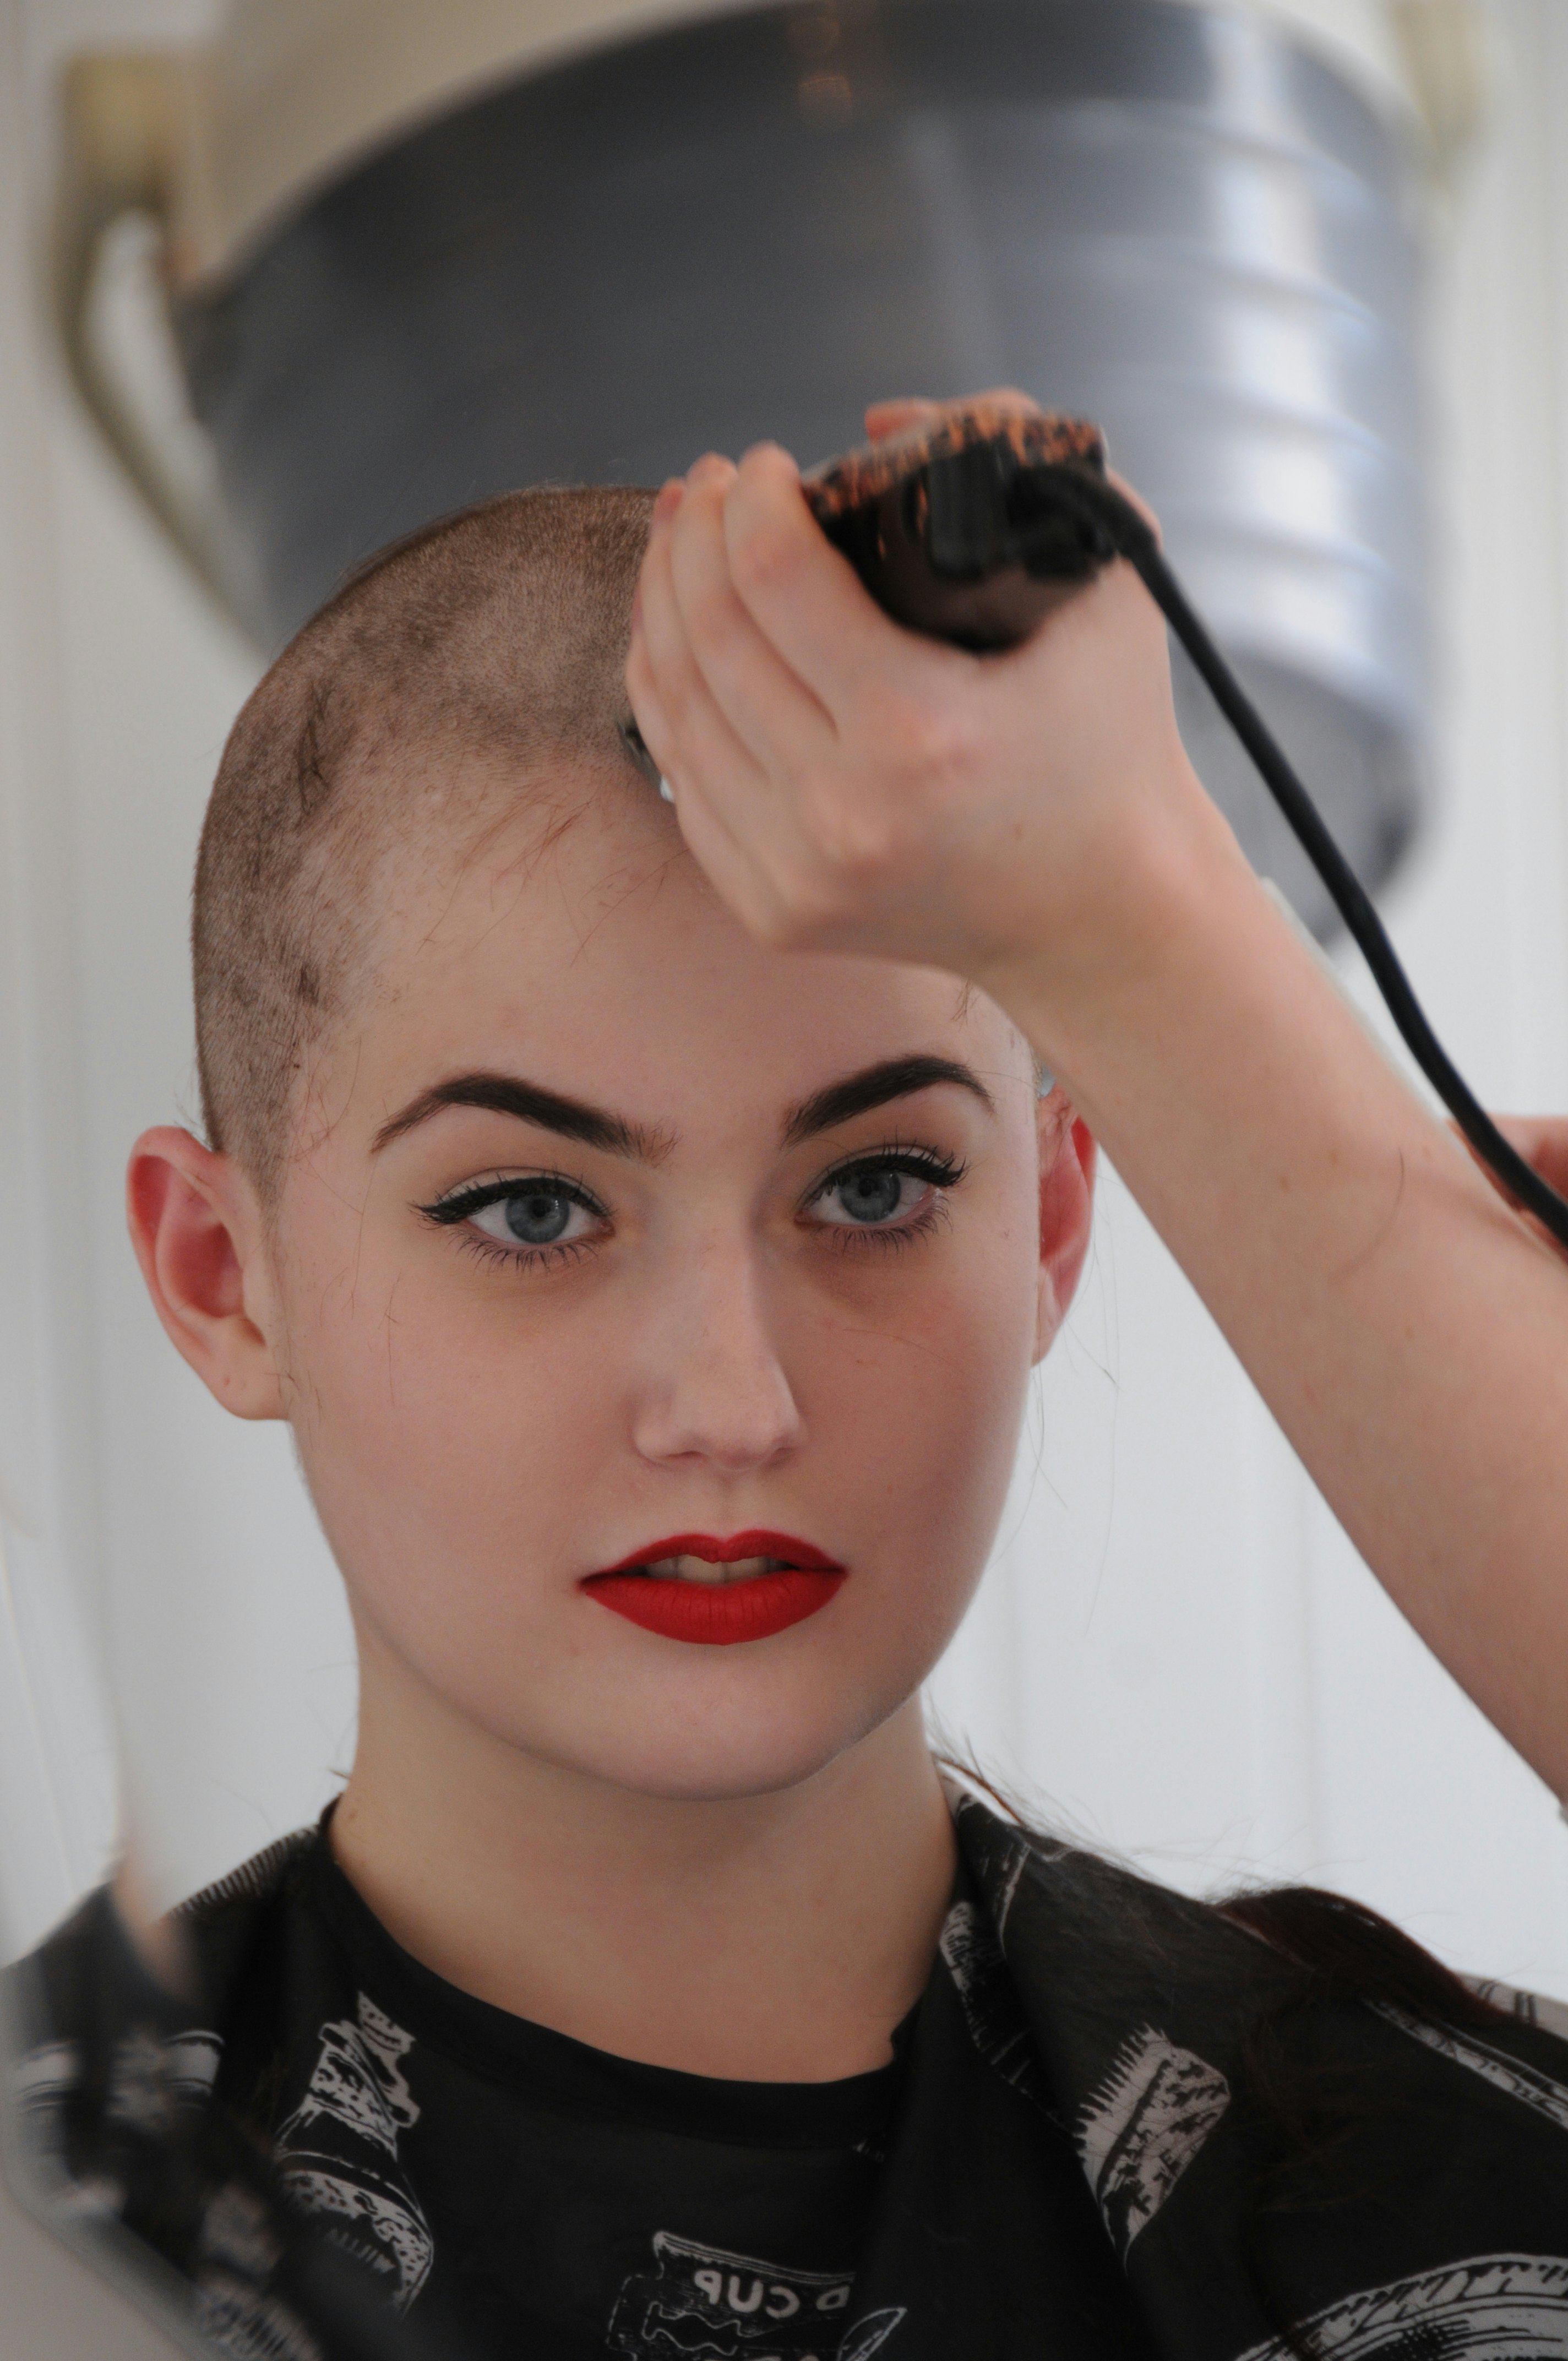 women head shave video